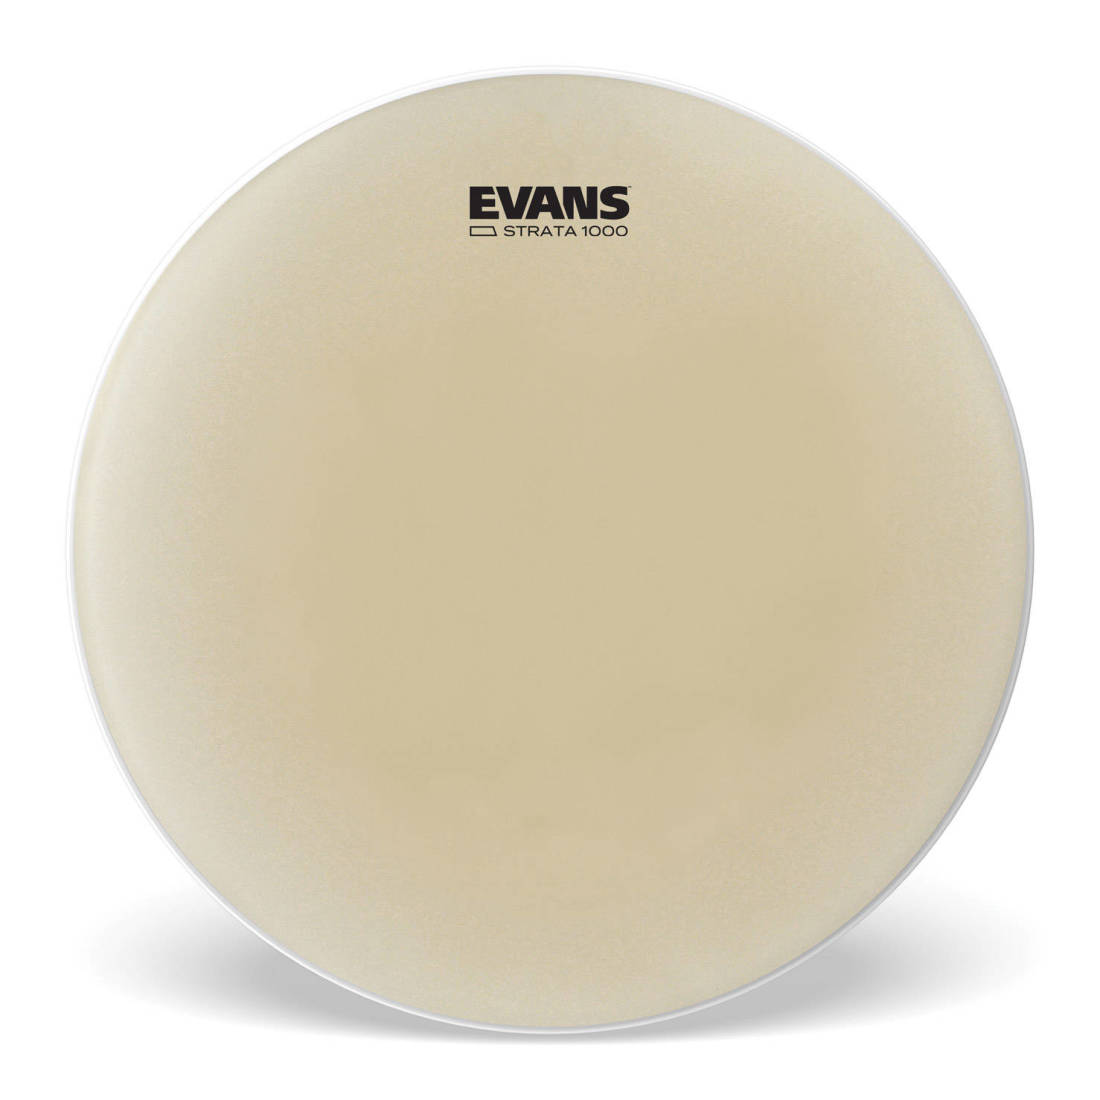 CT13S - Evans Strata 1000 Concert Drum Head, 13 Inch